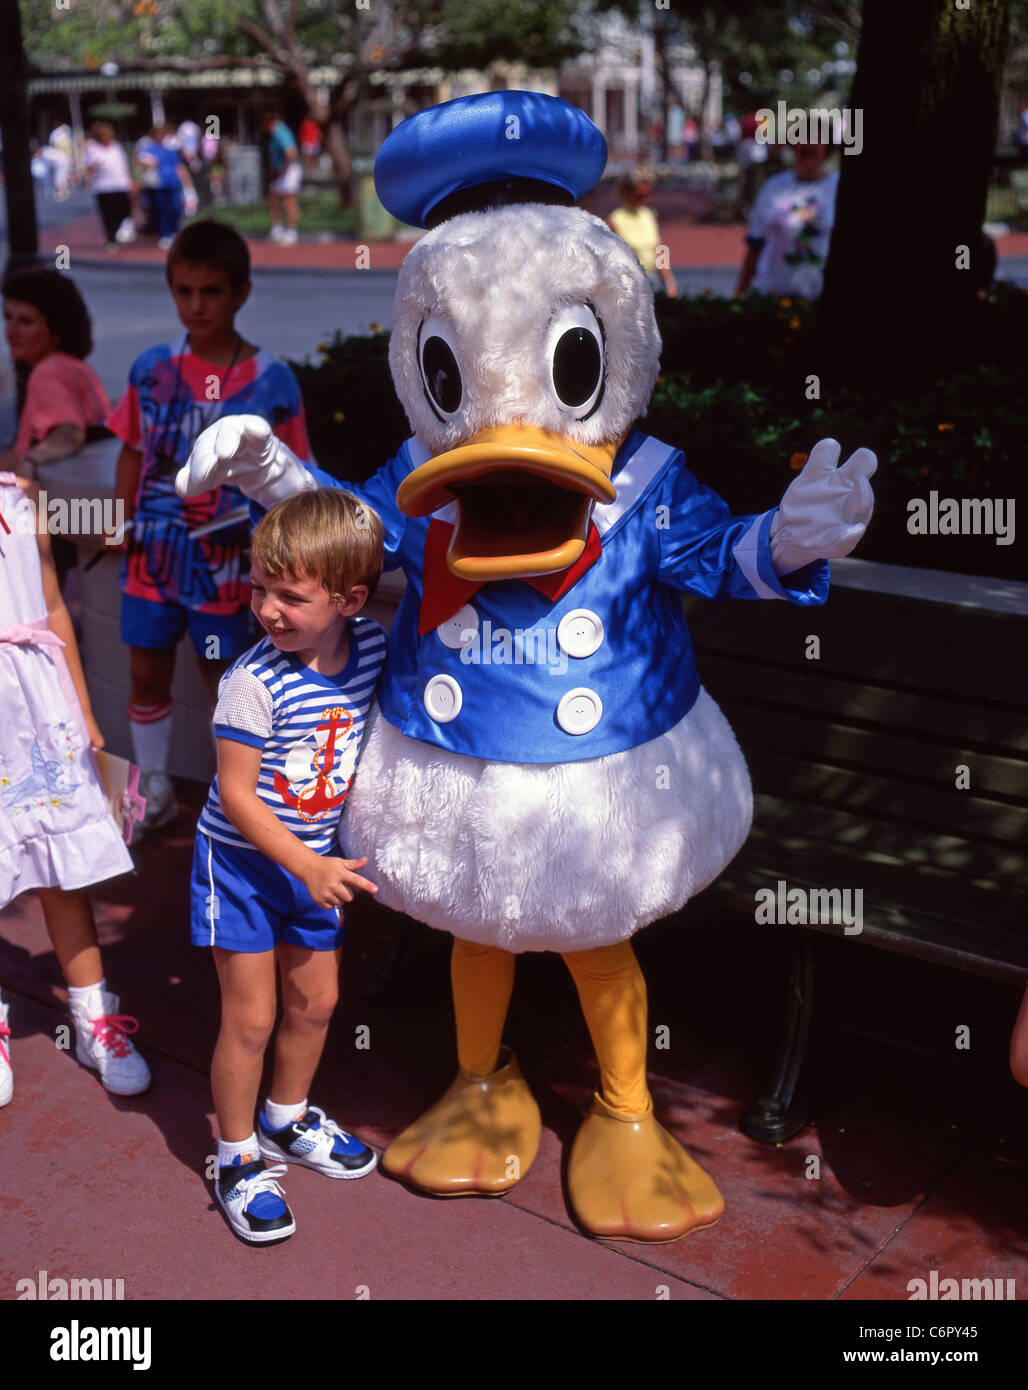 Child with Donald Duck character, Walt Disney World, Orlando, Florida, United States of America Stock Photo